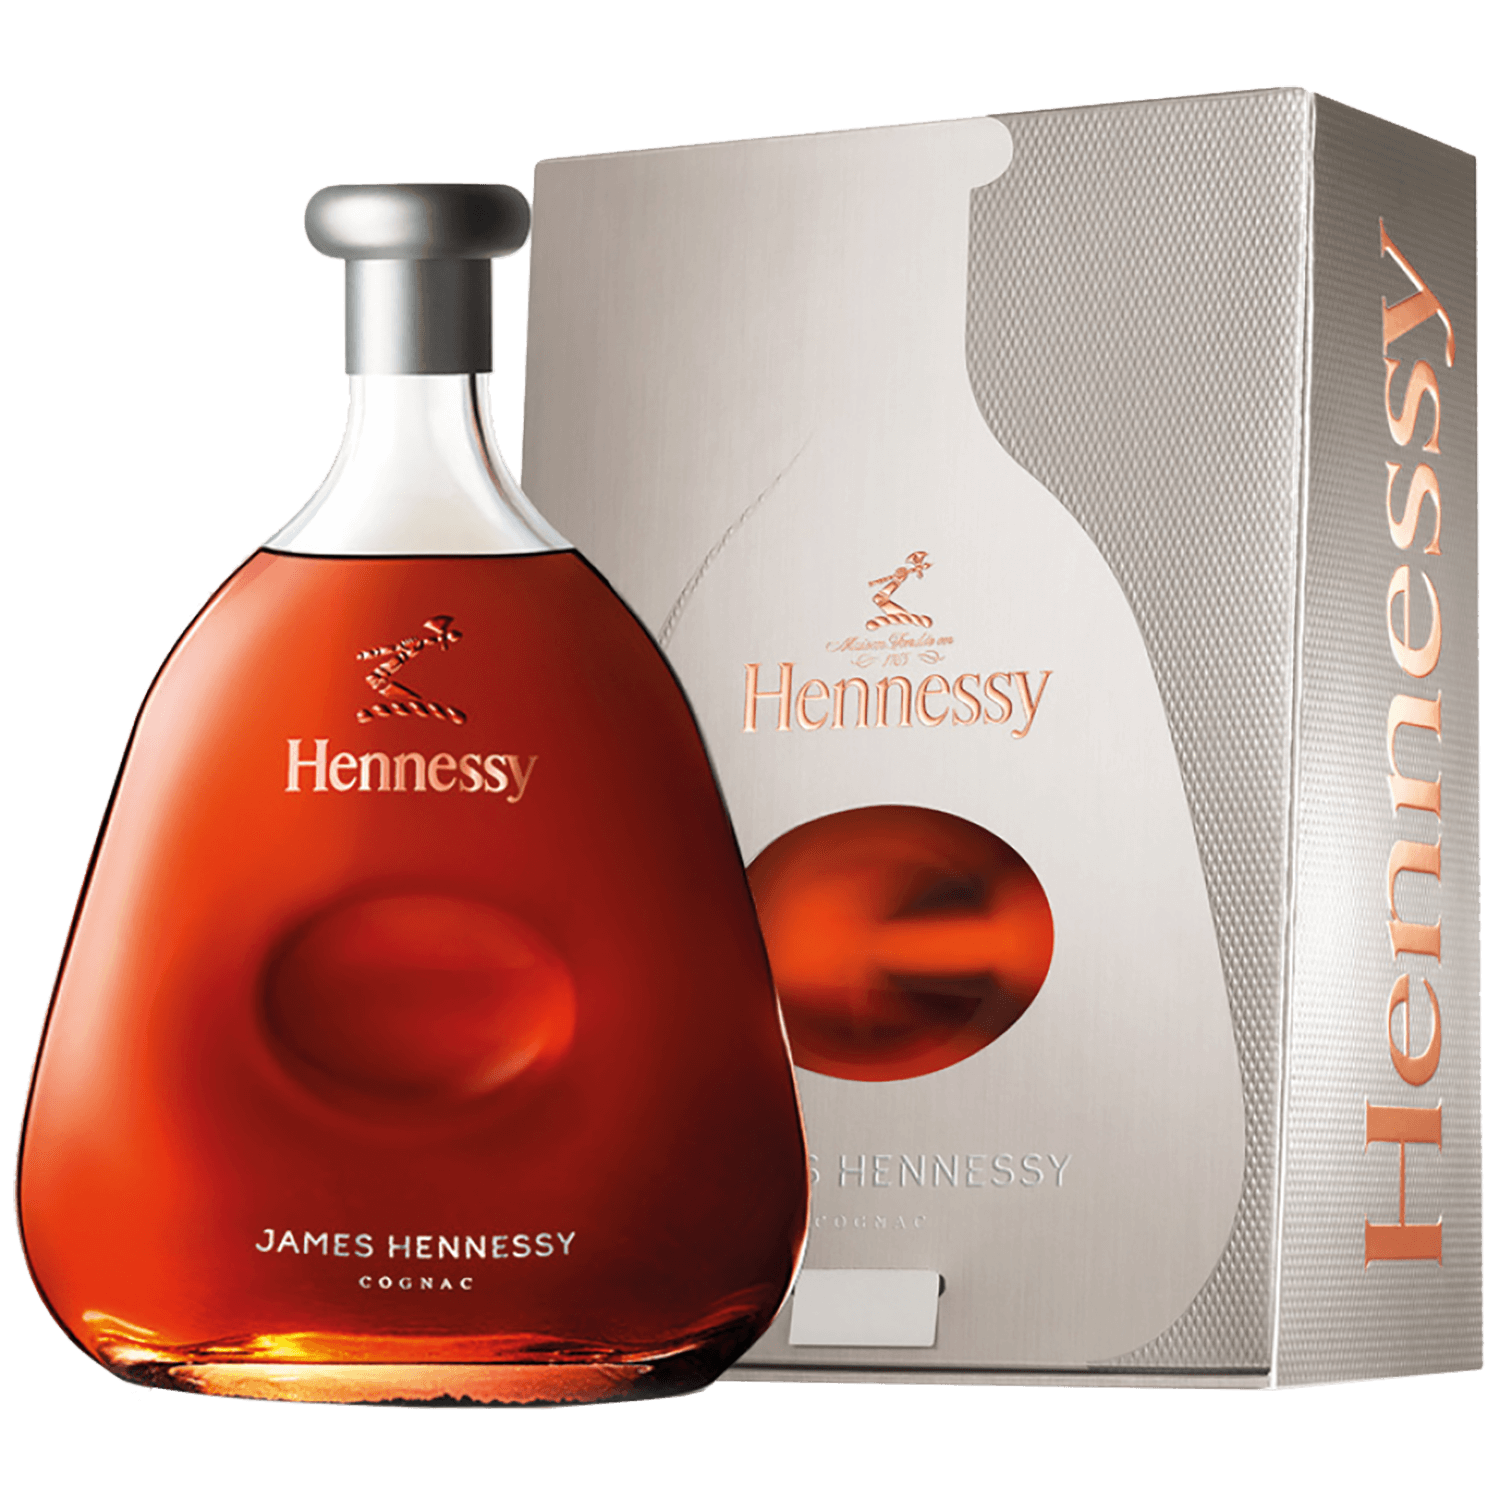 hennessy cognac vs Hennessy James Hennessy Cognac (gift box)